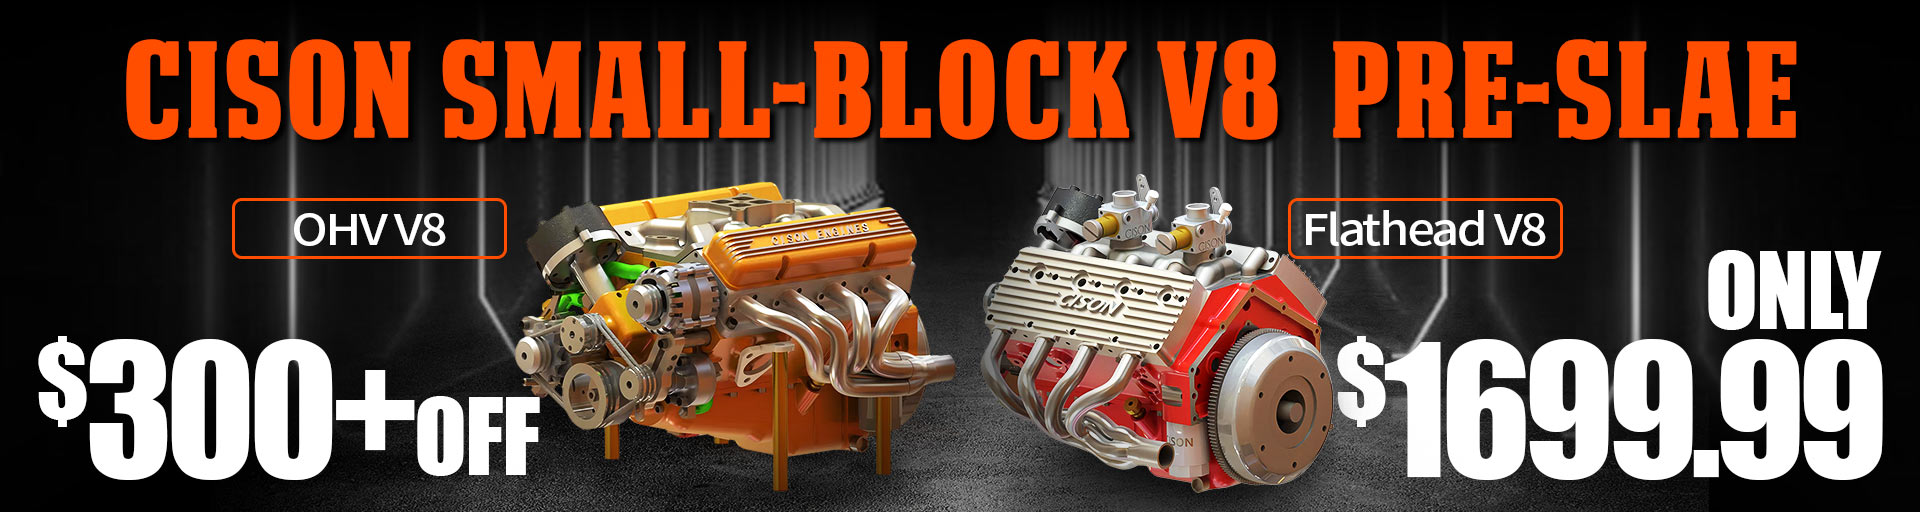 cison v8 engine model kit that works small block ohv flathead engine